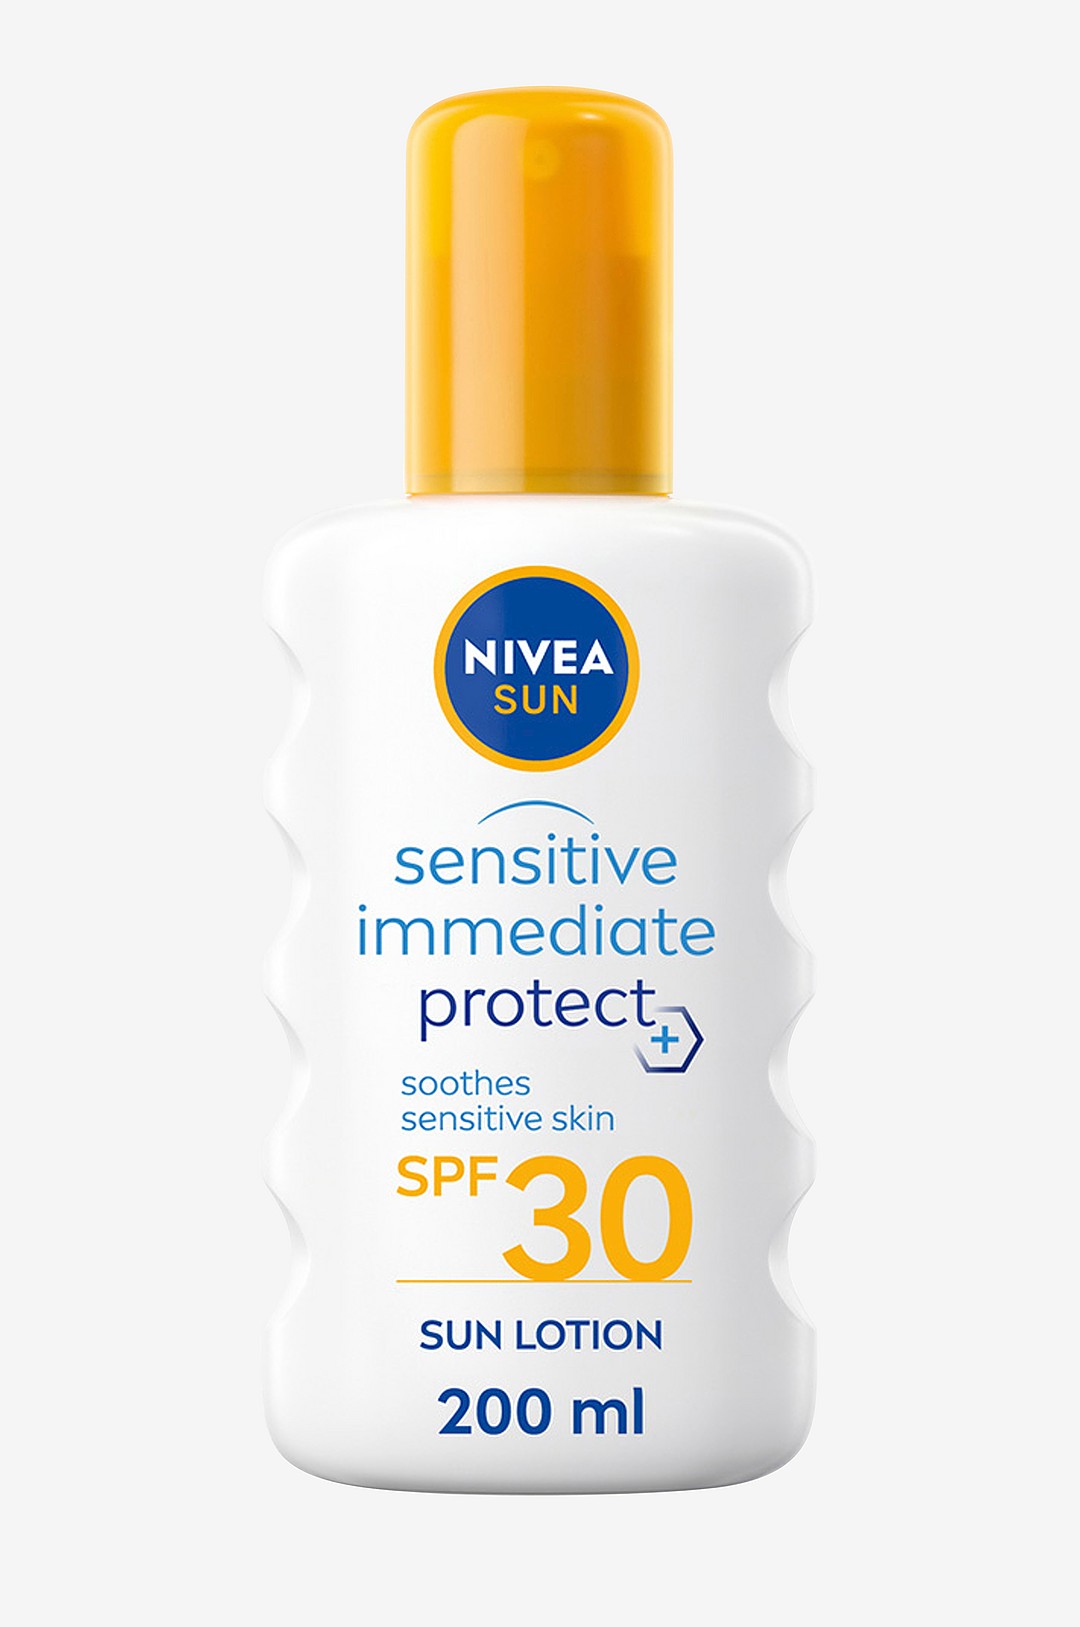 Nivea - Sensitive Immediate Protect Soothing Sun Spray SPF 30 Nivea Sun 200 ml